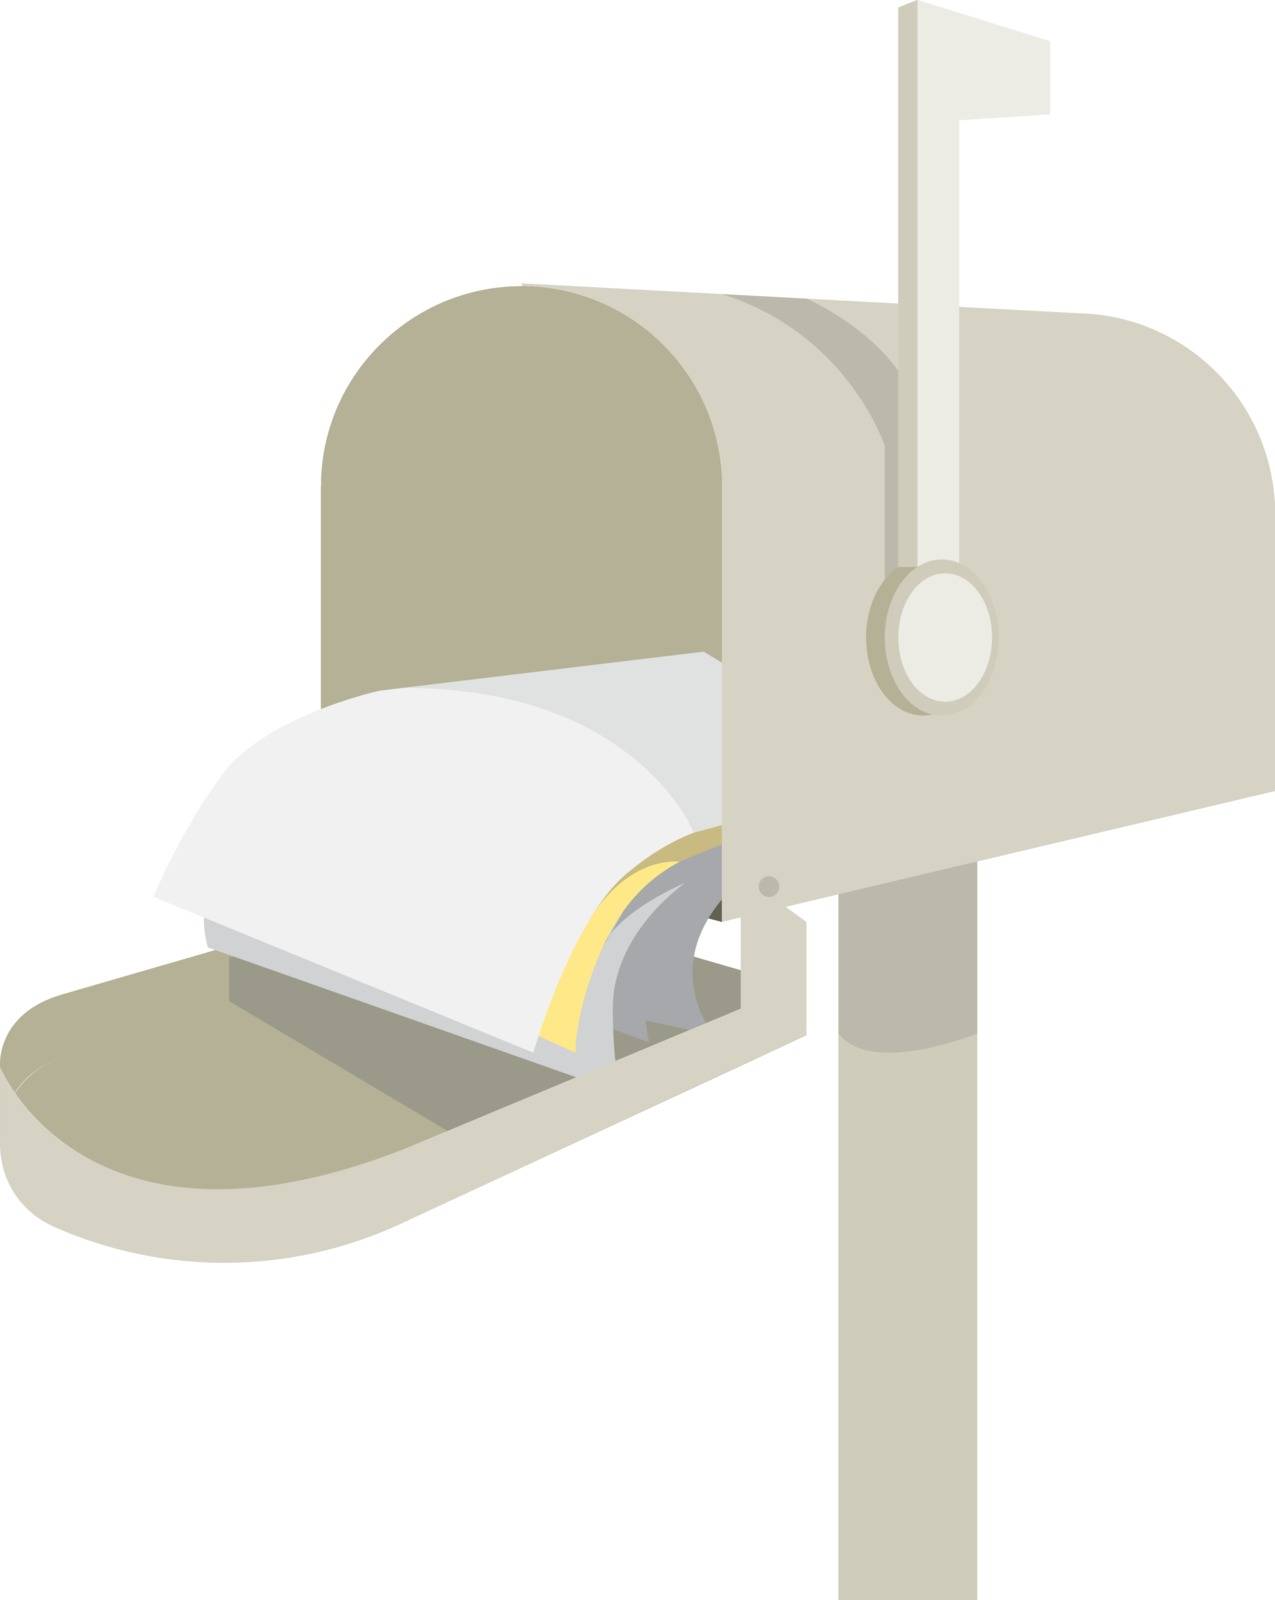 Mail box, illustration, vector on white background.